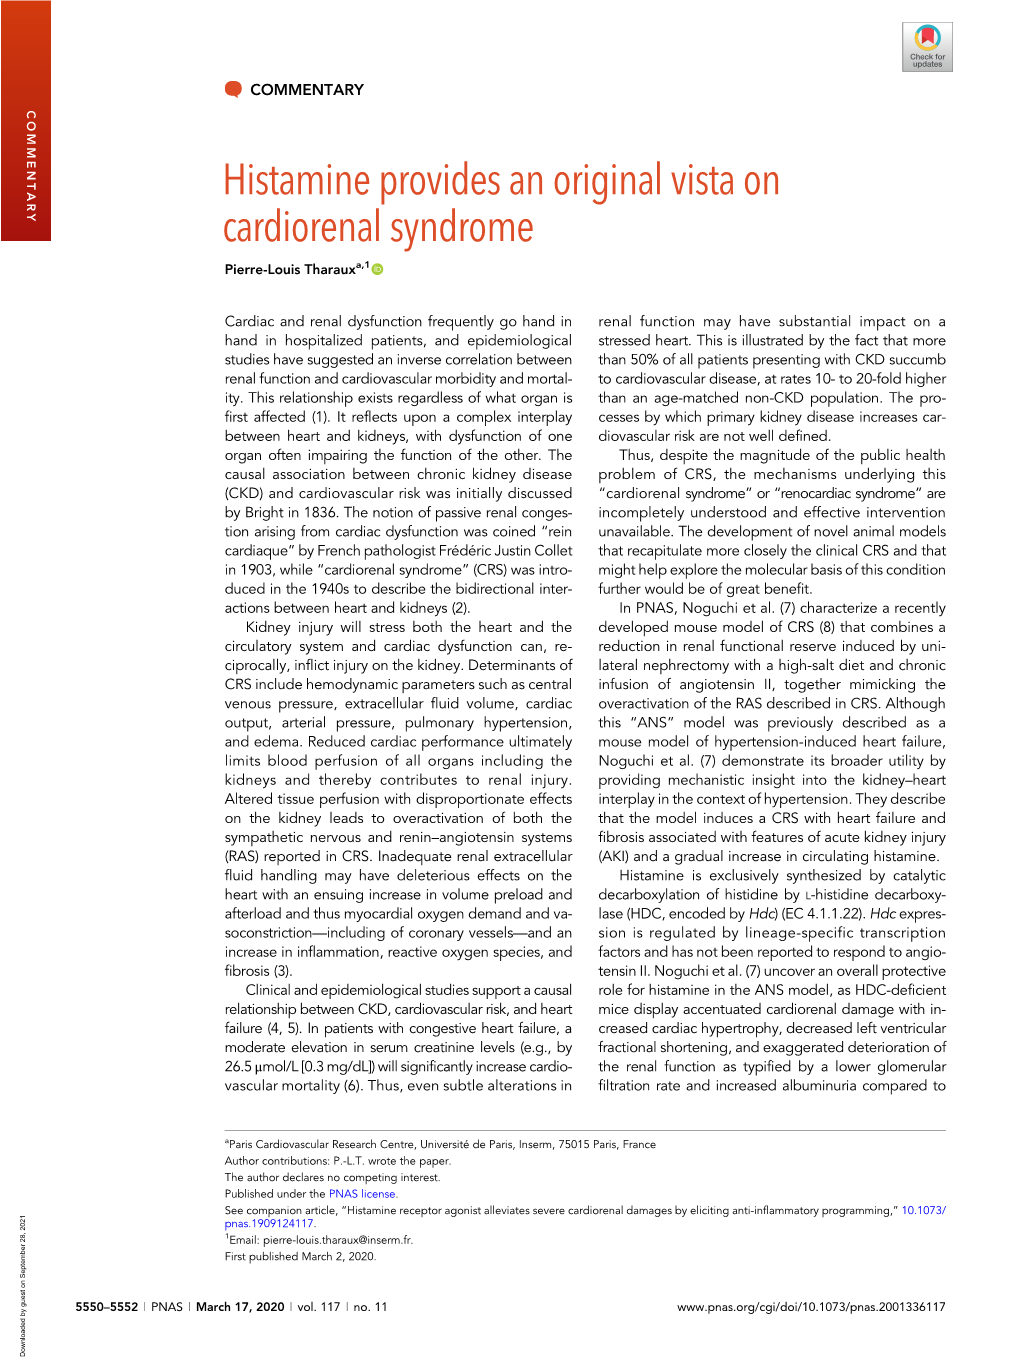 Histamine Provides an Original Vista on Cardiorenal Syndrome Pierre-Louis Tharauxa,1